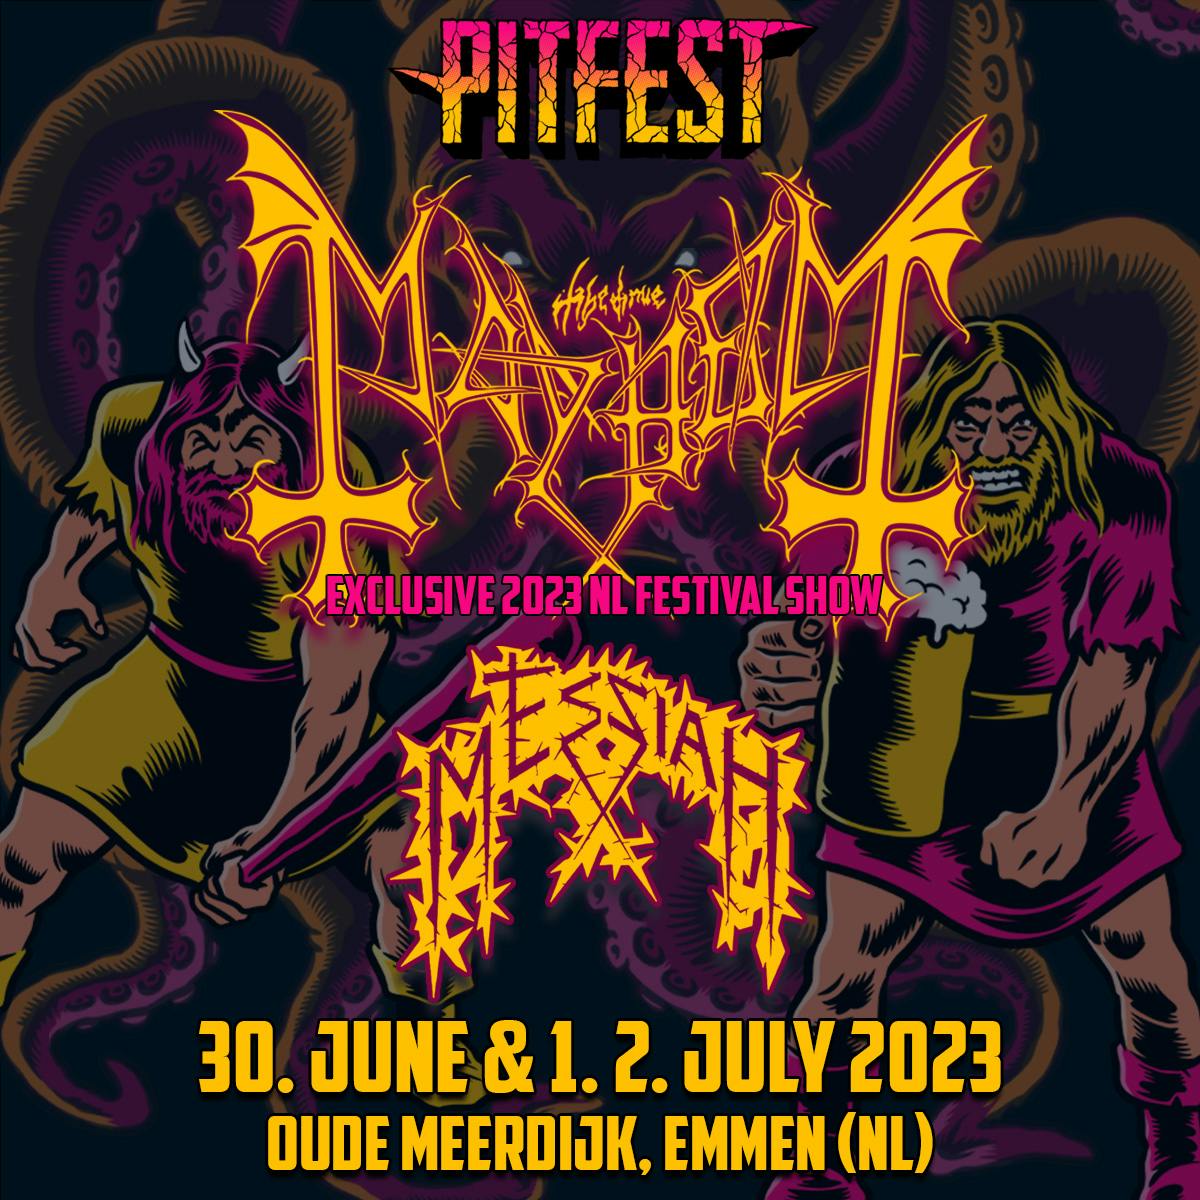 Mayhem confirmed for exclusive 2023 Dutch festival show